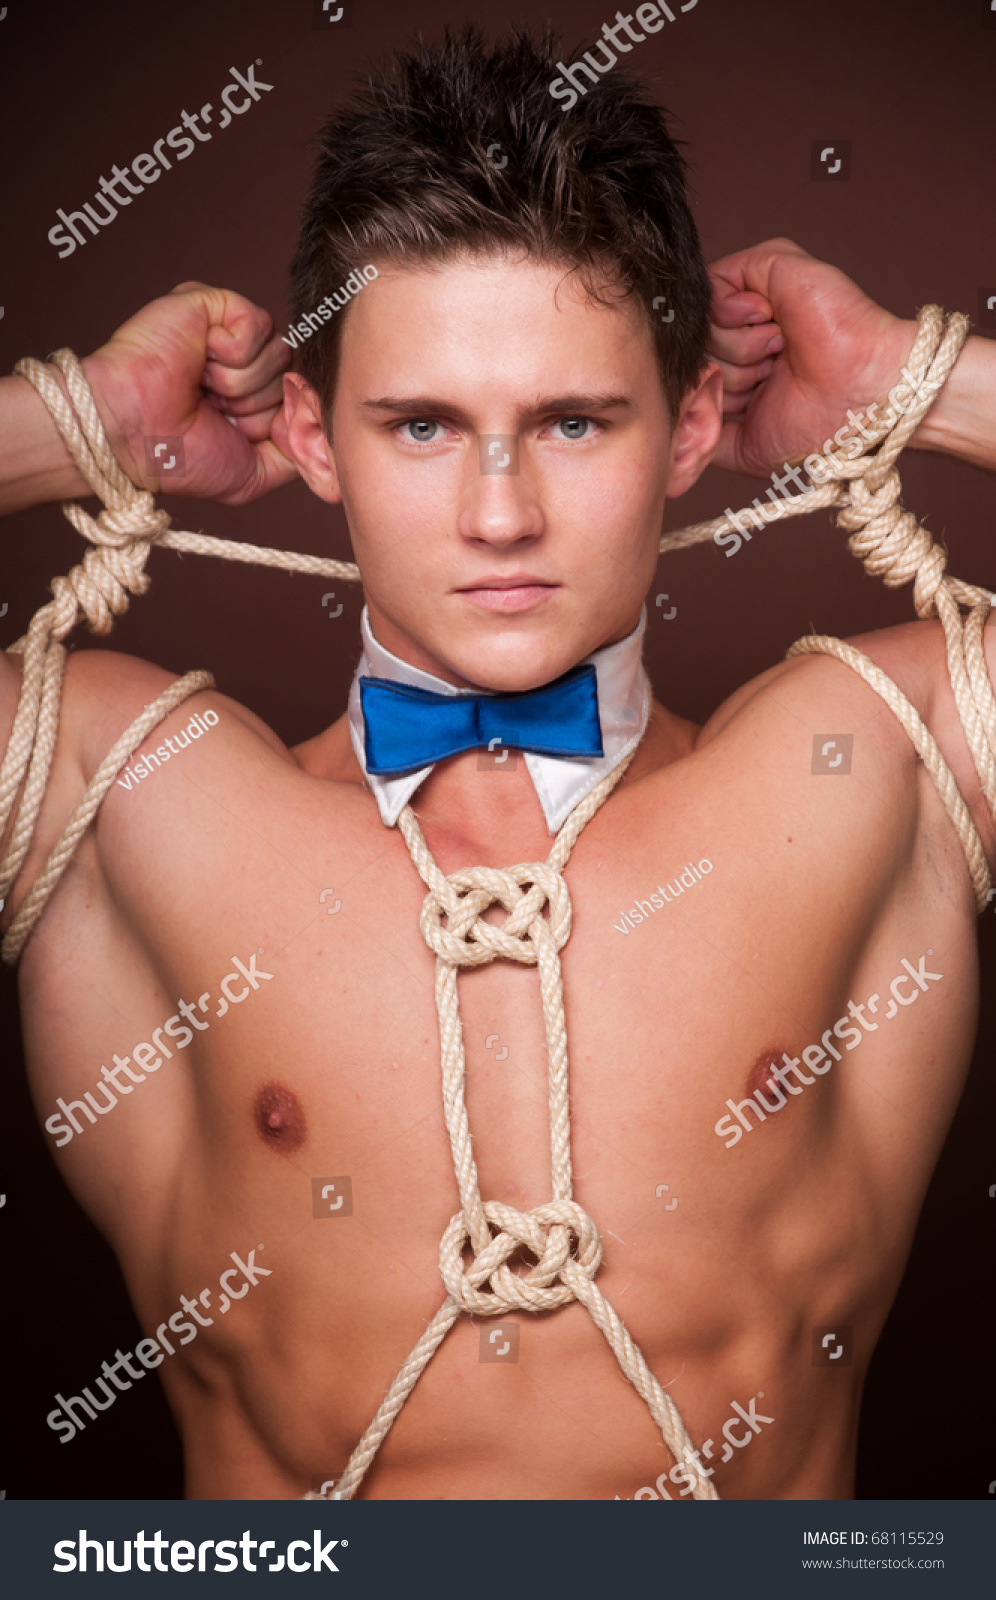 Men in bondage japanese ropes